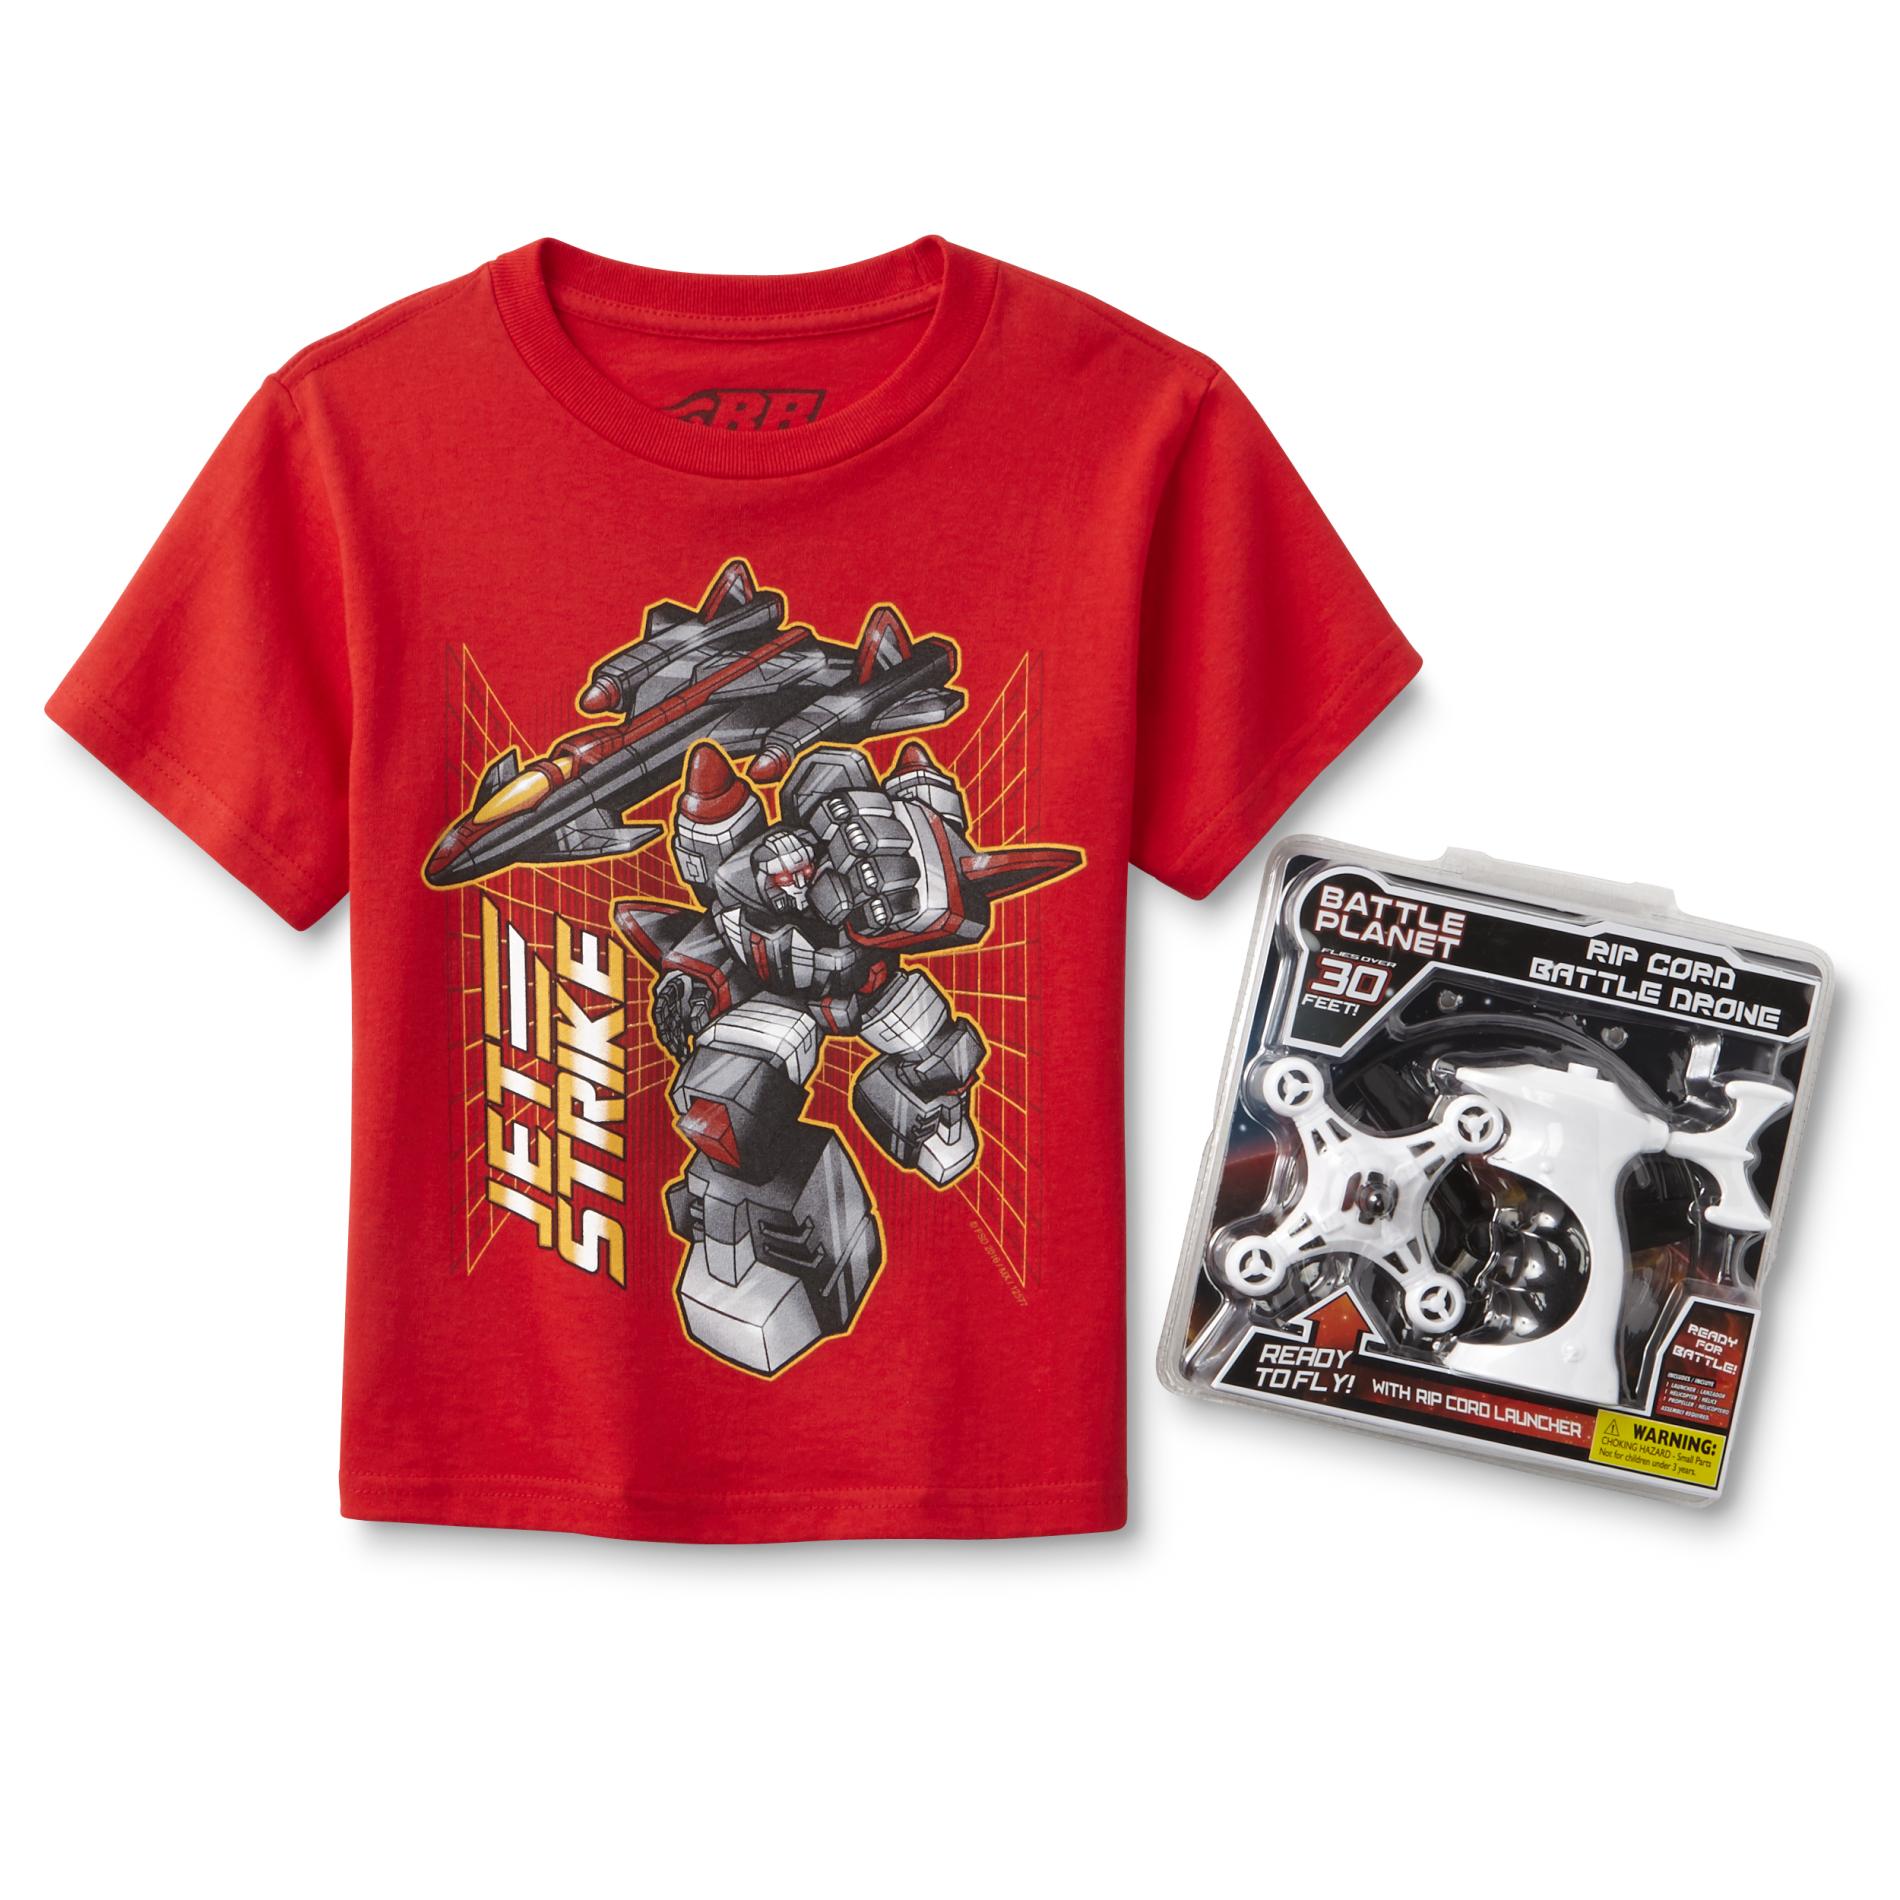 Boy's Graphic T-Shirt & Battle Drone Toy